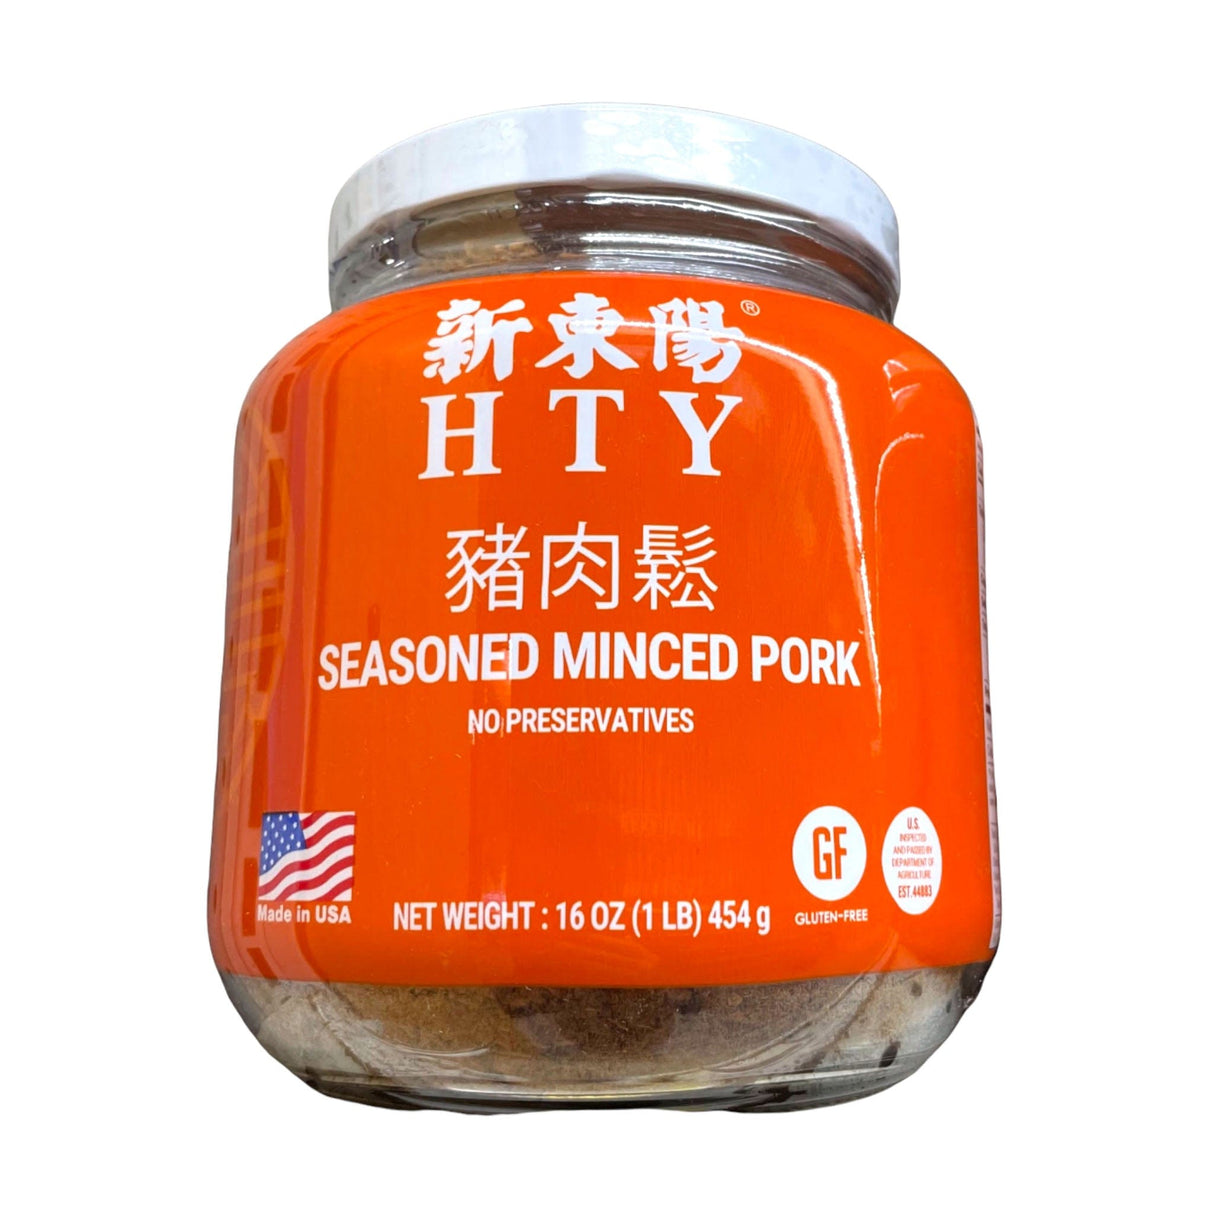 HTY Seasoning Minced Pork